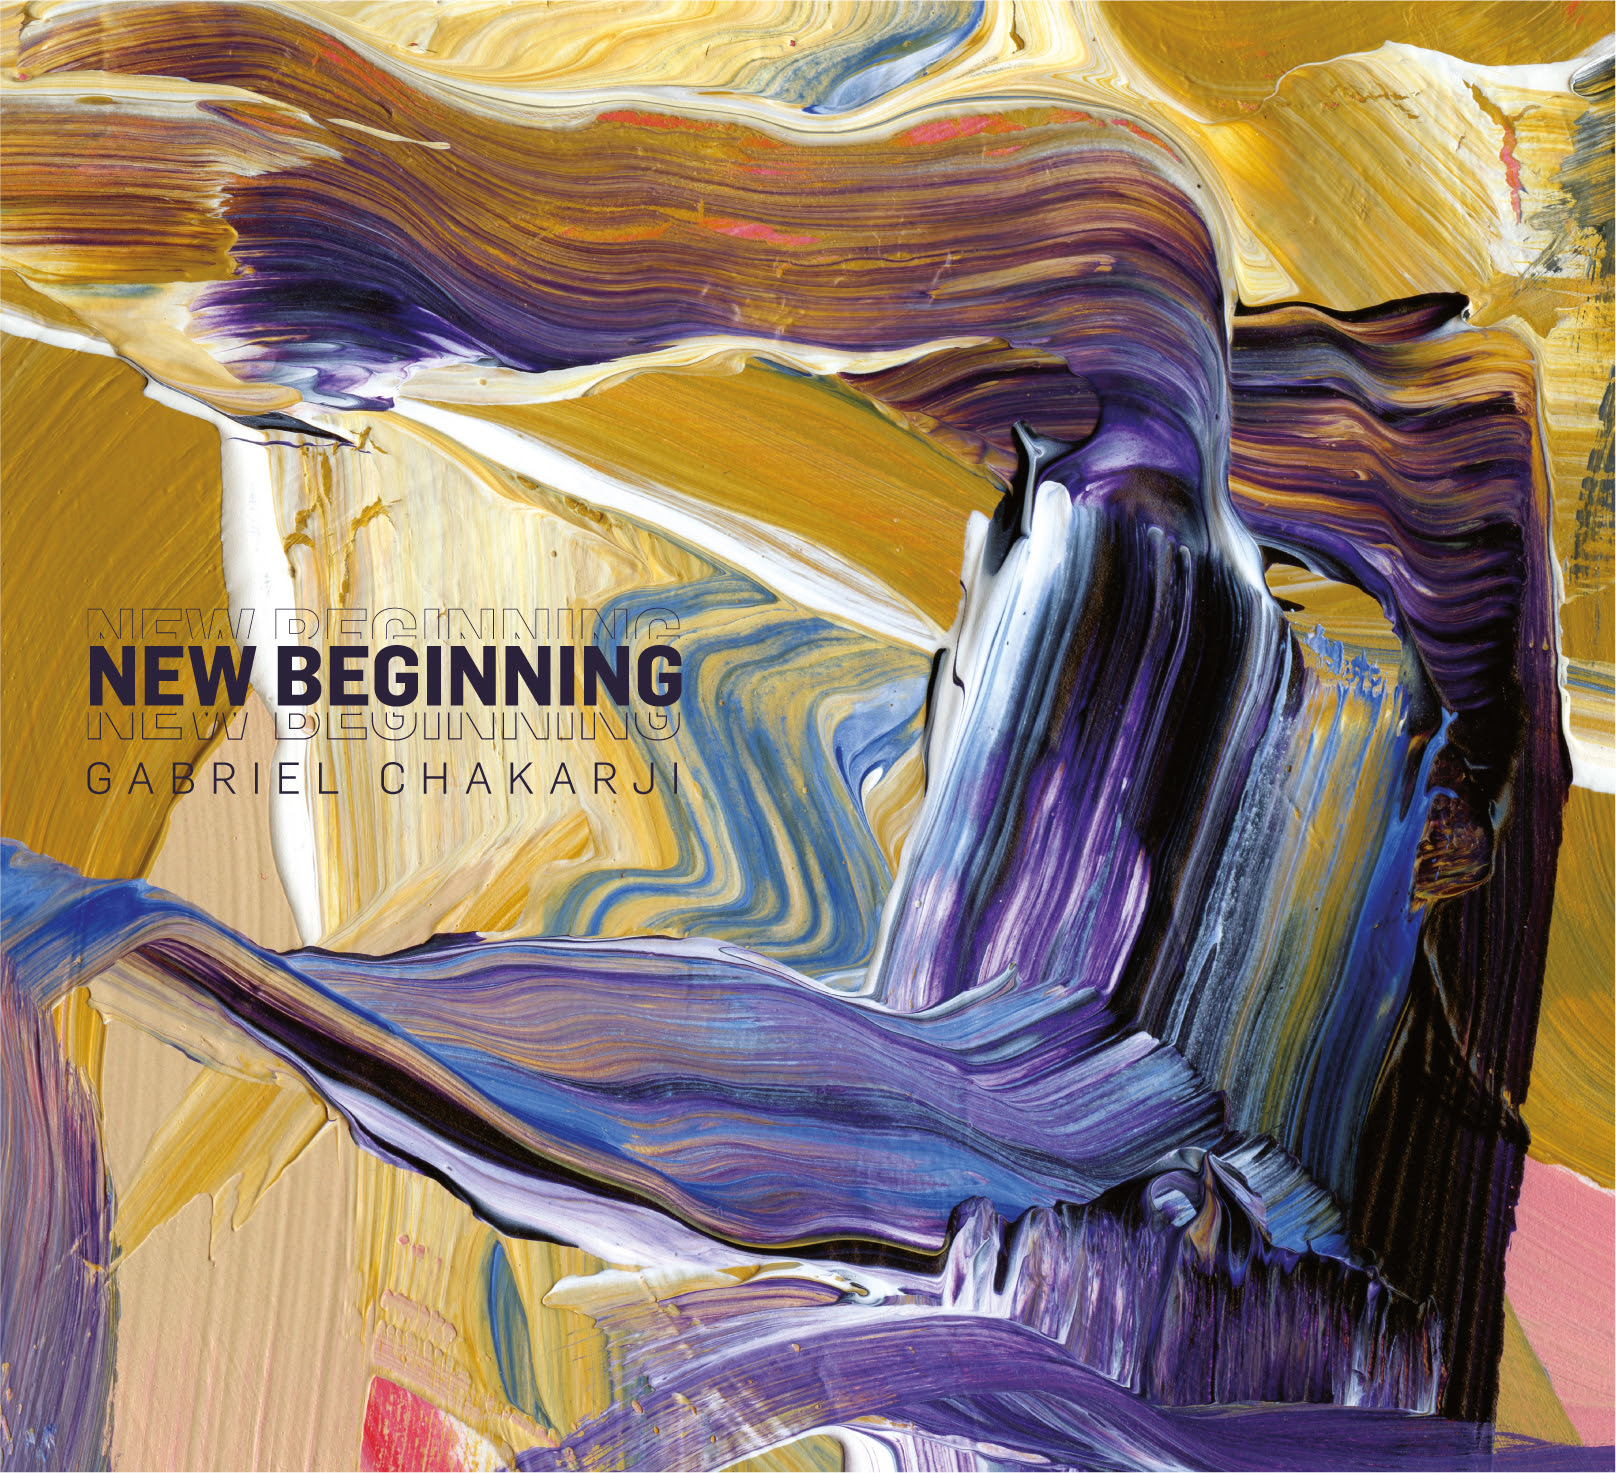 Pianista venezolano Gabriel Chakarji, comparte su nuevo disco ‘New Beginning’. Cusica Plus.